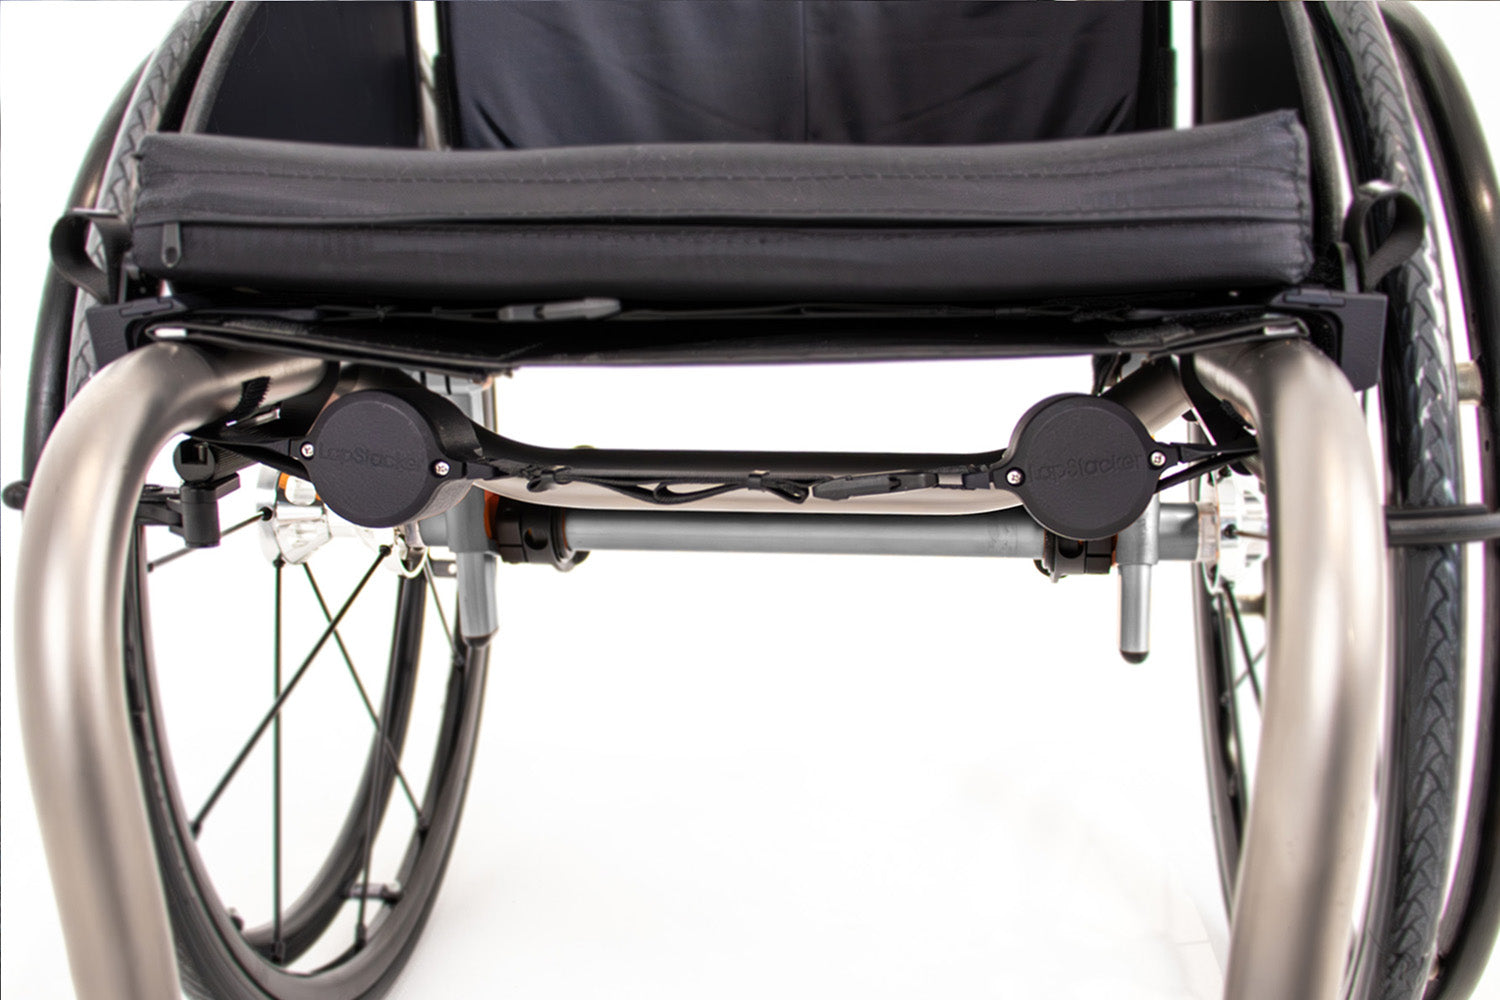 LapStacker Flex installed horizontally, using straps around the frame of a manual wheelchair